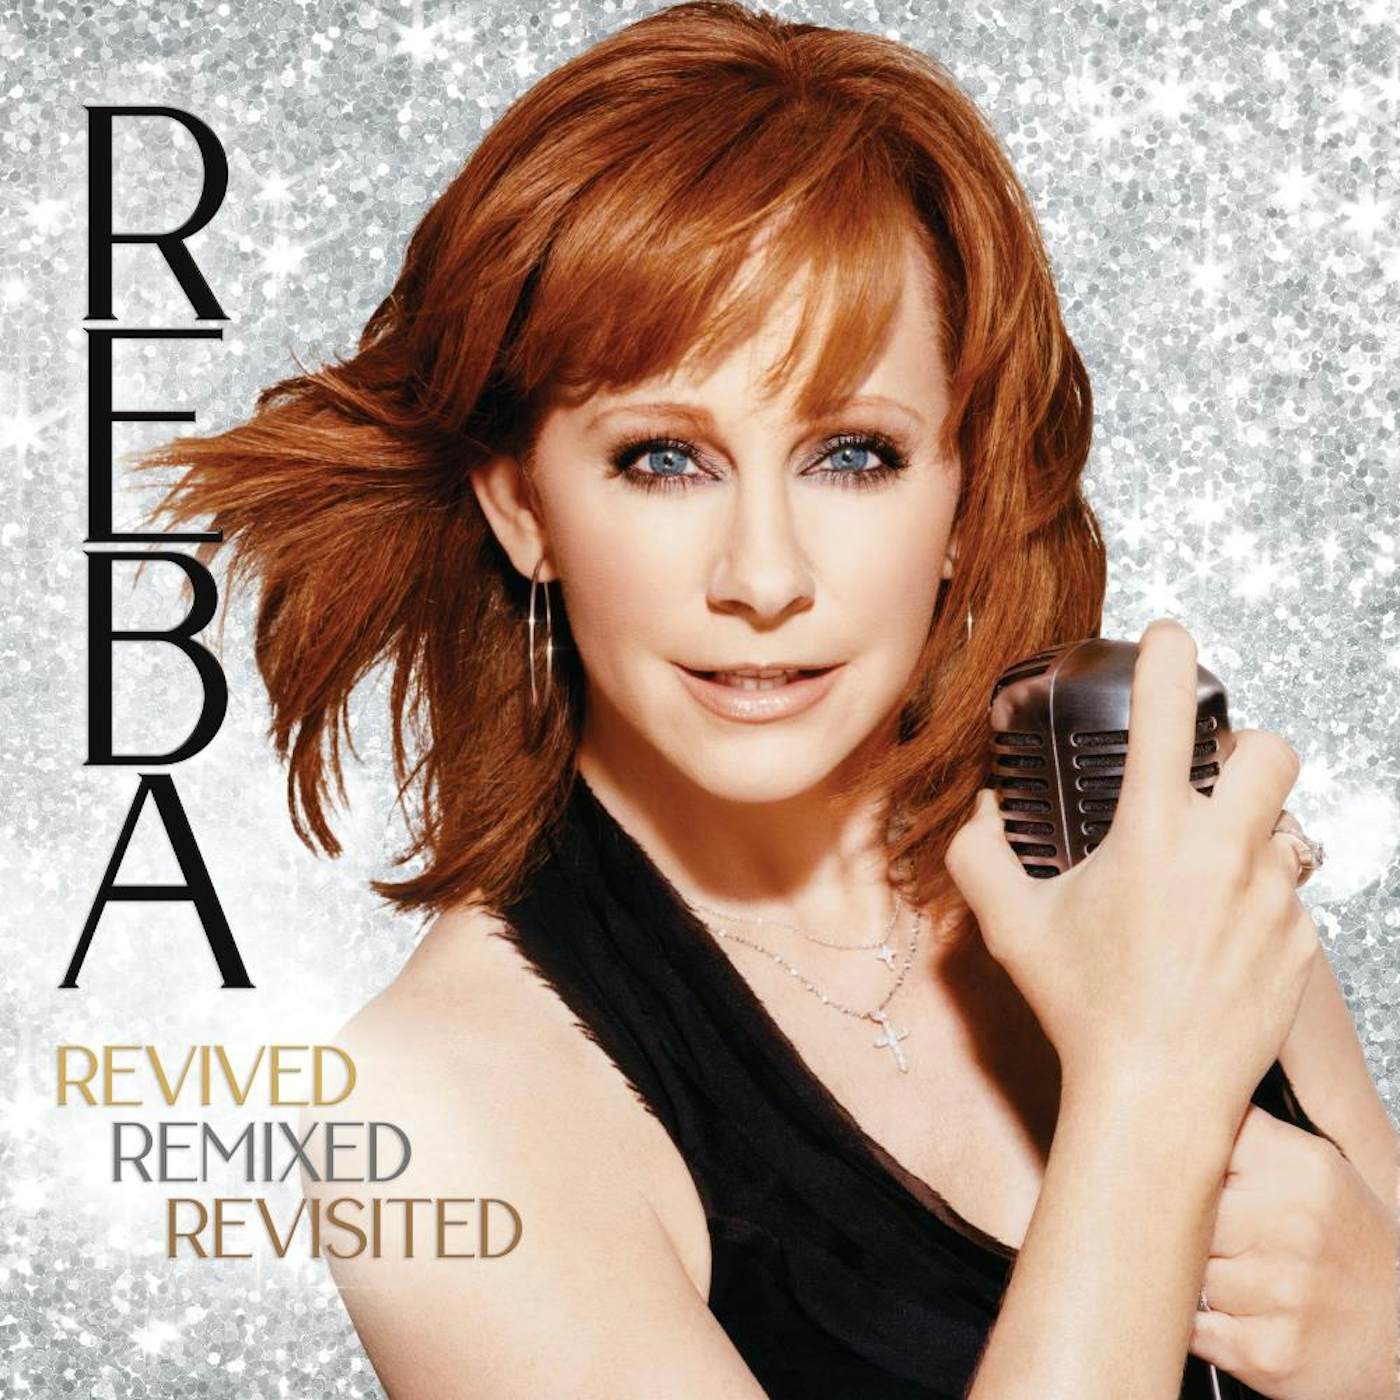 Reba McEntire REVIVED REMIXED REVISITED (3LP BOX SET) (Vinyl)